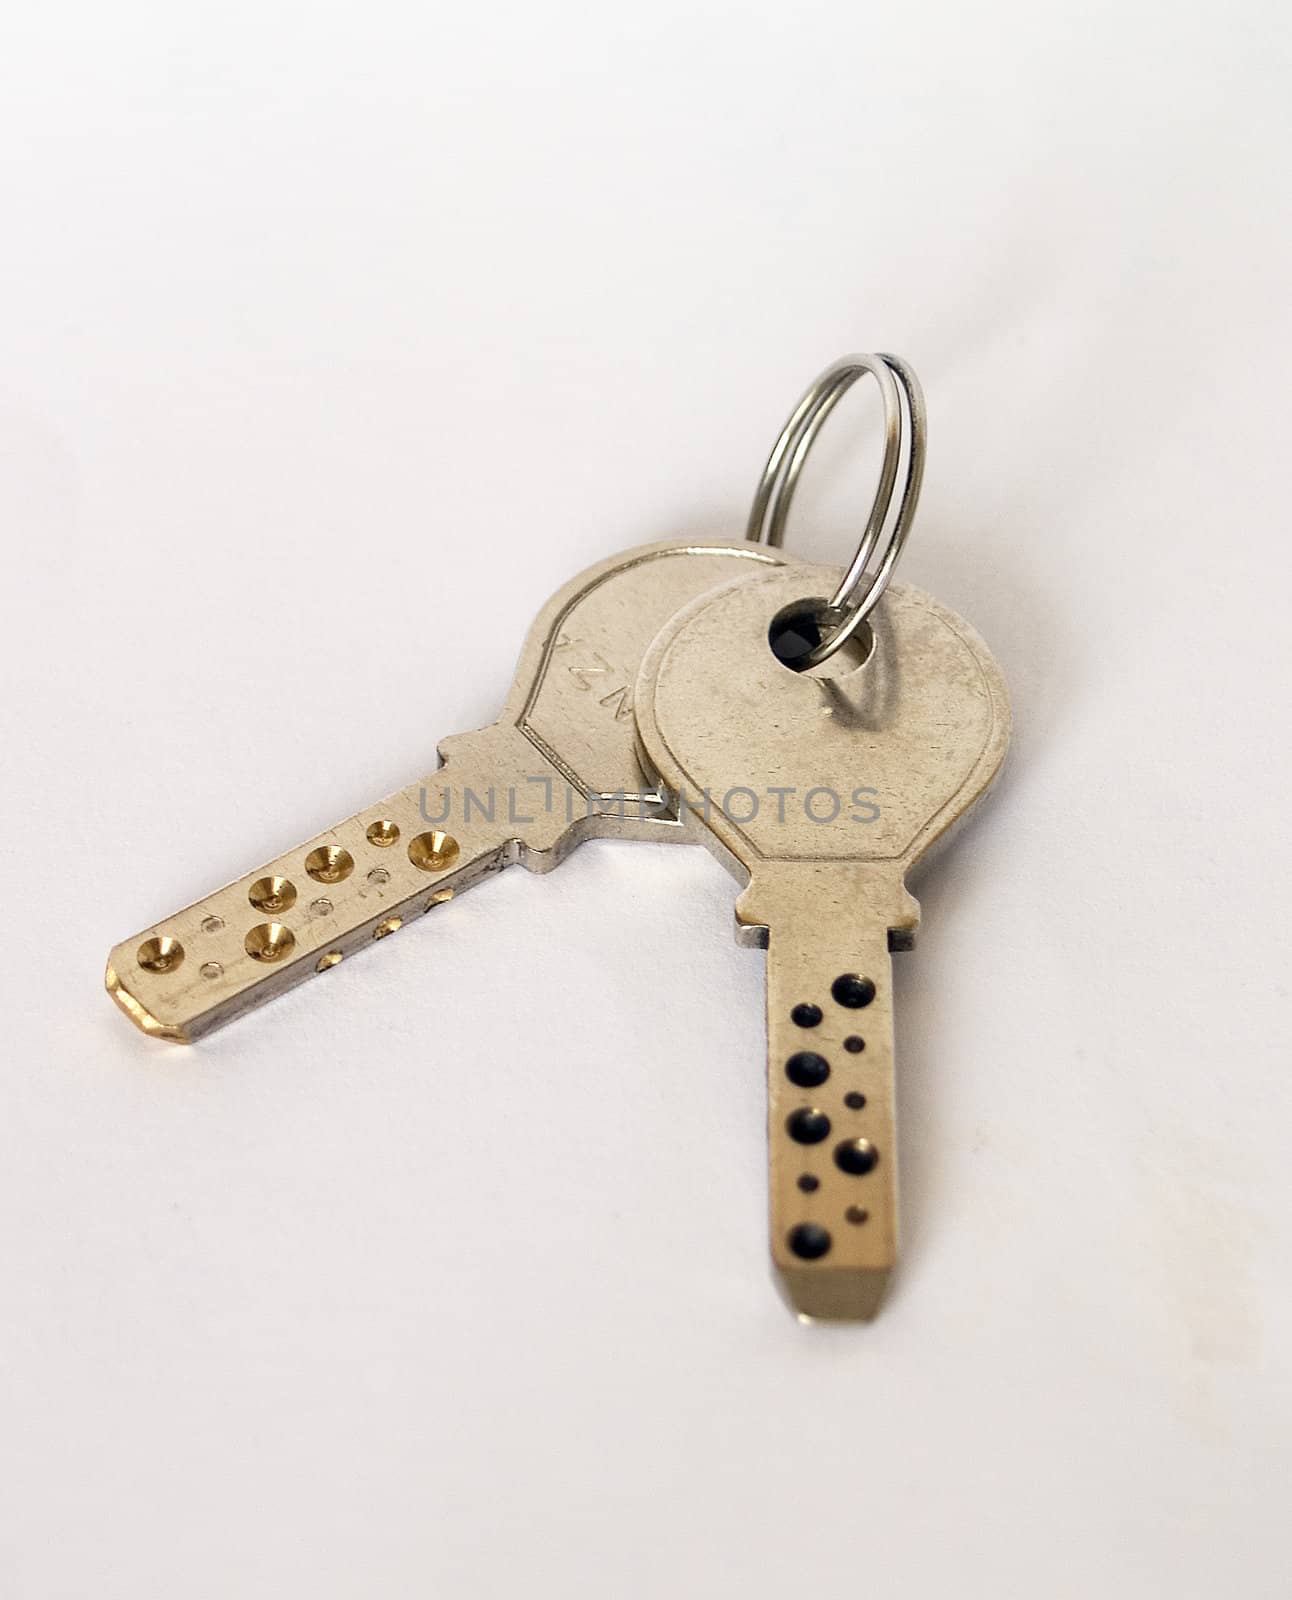 Keys by lauria